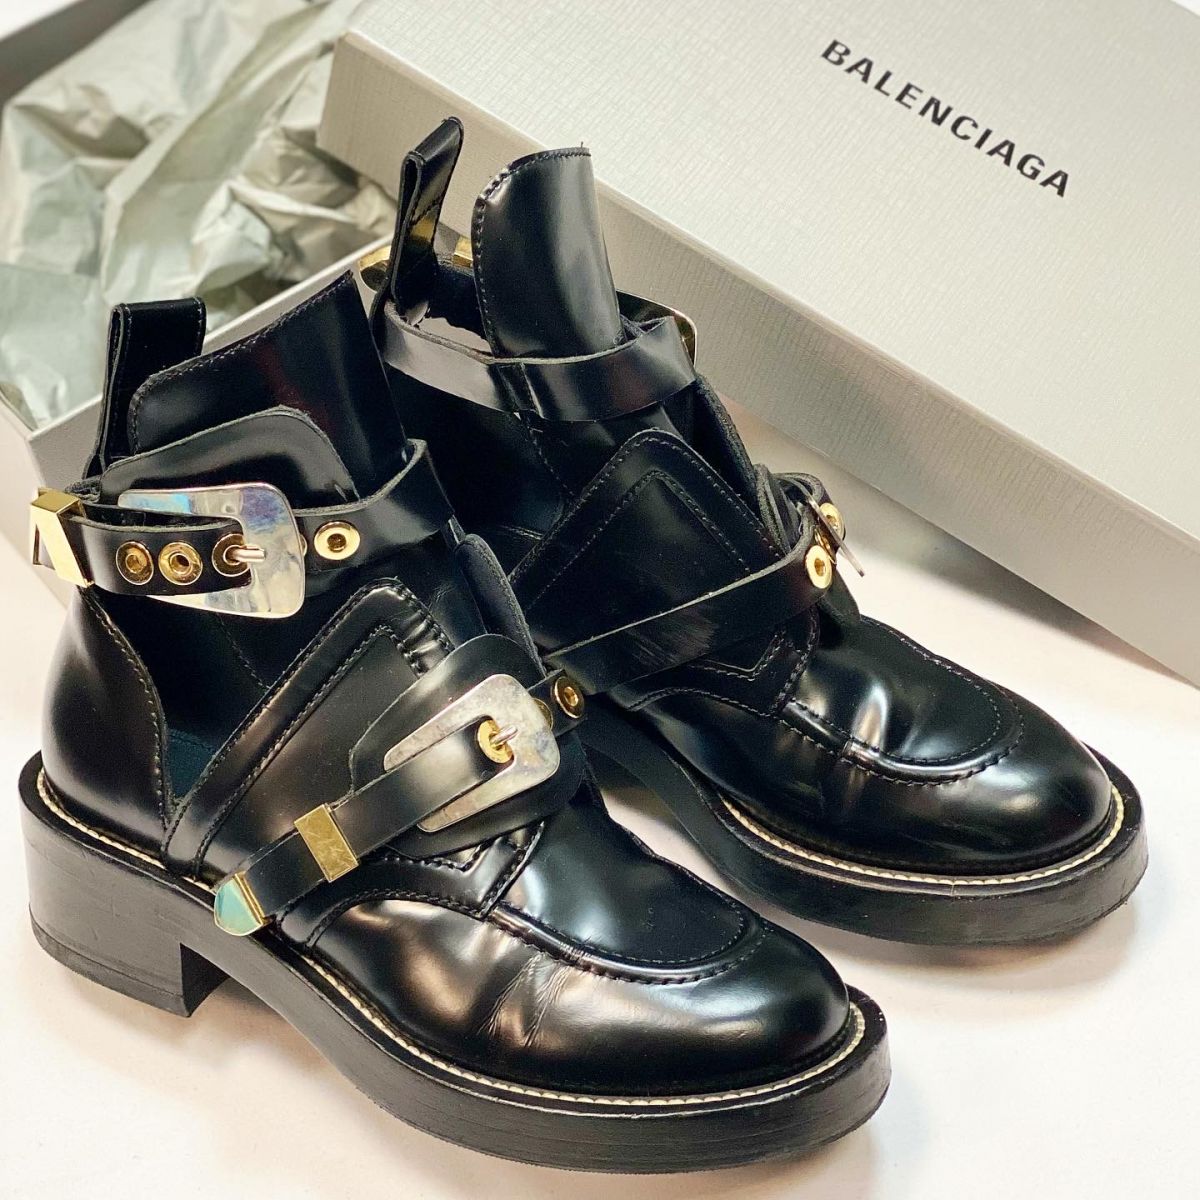 Ботинки Balenciaga размер 38 цена 18 463 руб 